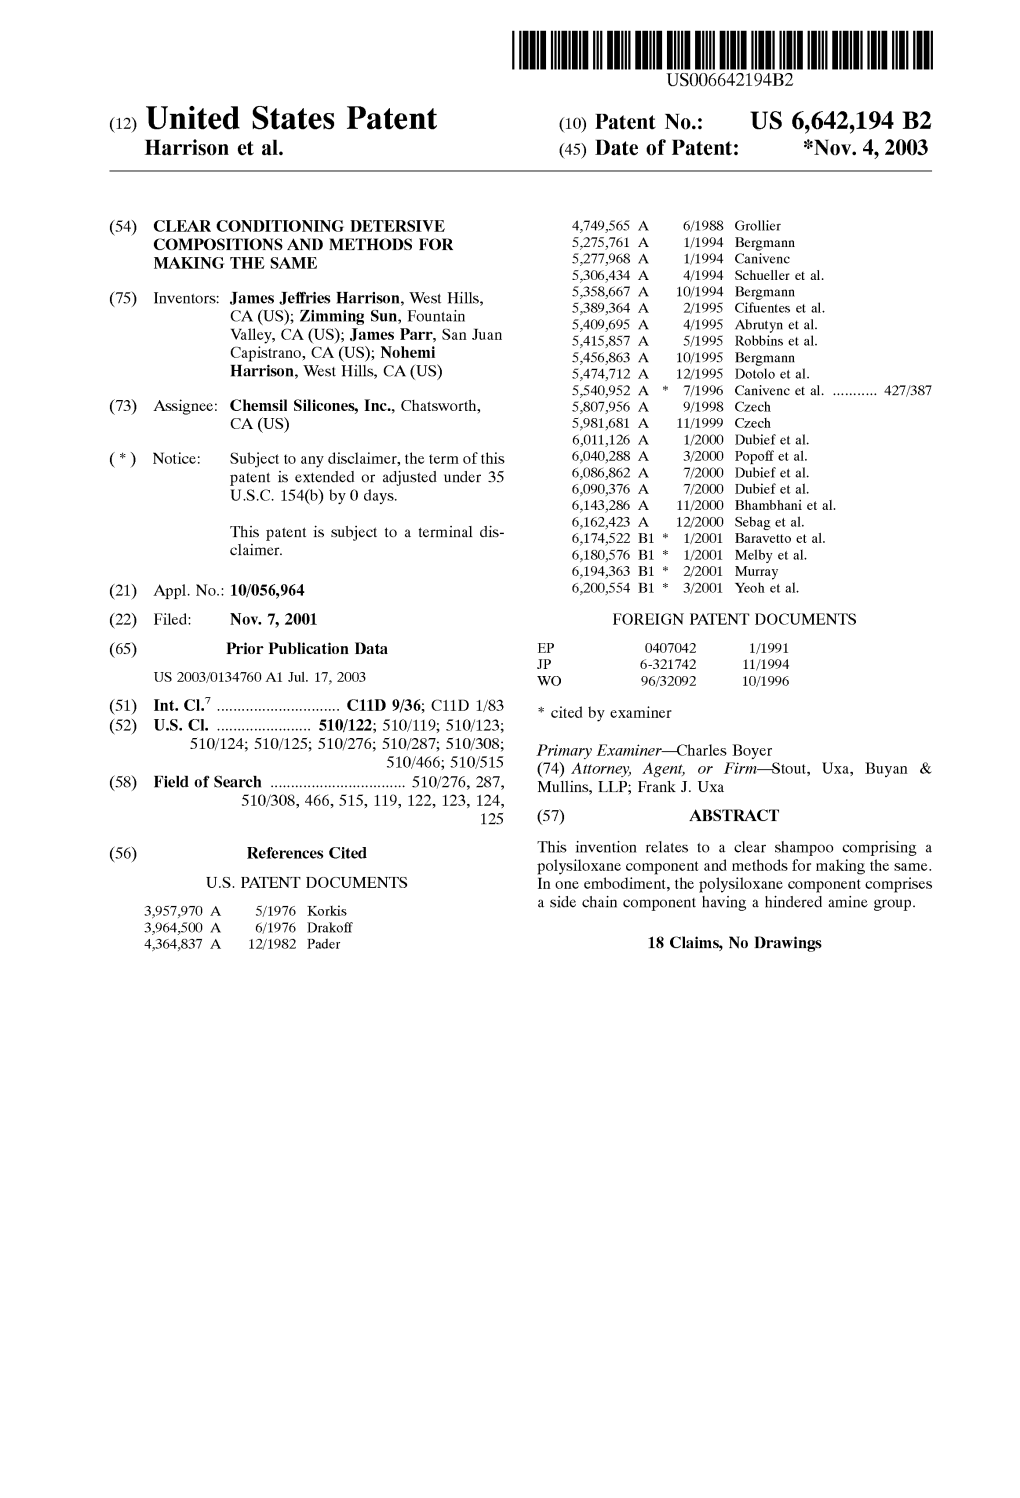 (12) United States Patent (10) Patent No.: US 6,642,194 B2 Harrison Et Al